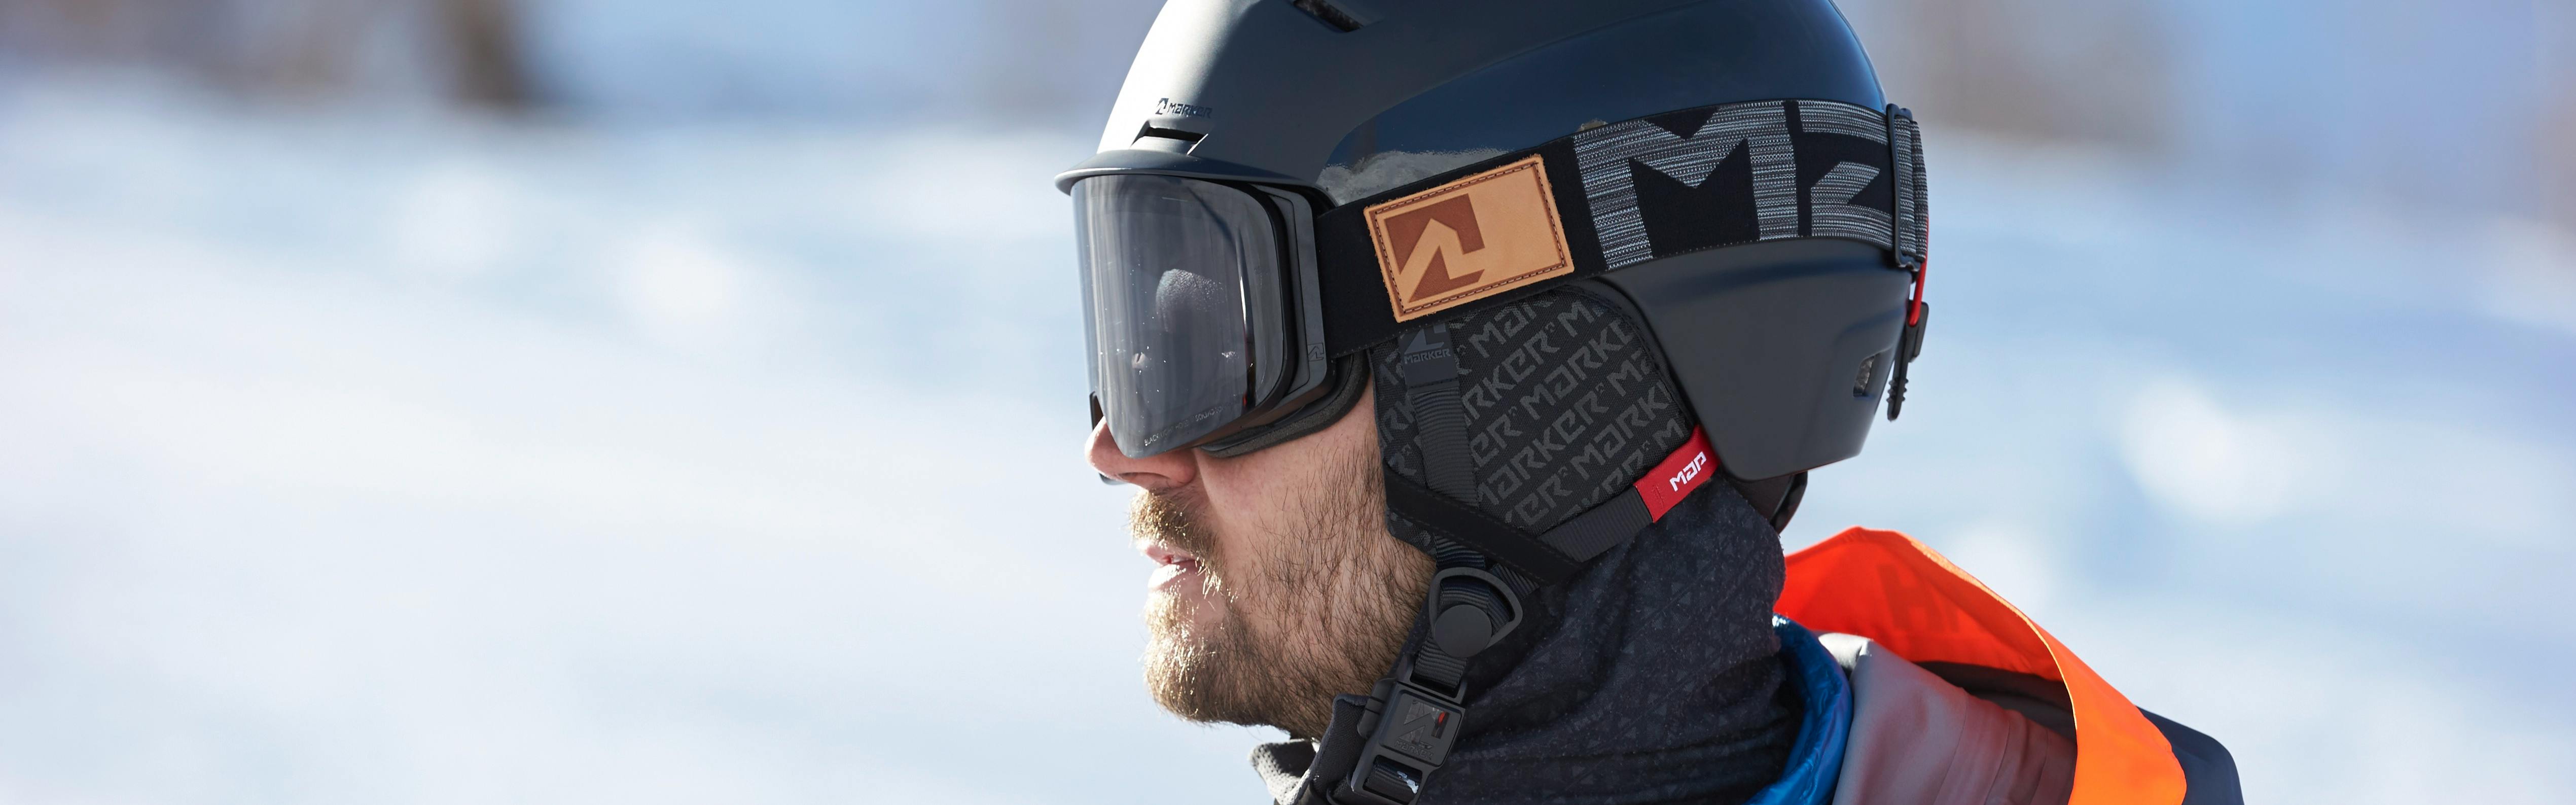 Closeup on a man wearing a black ski helmet and black ski goggles